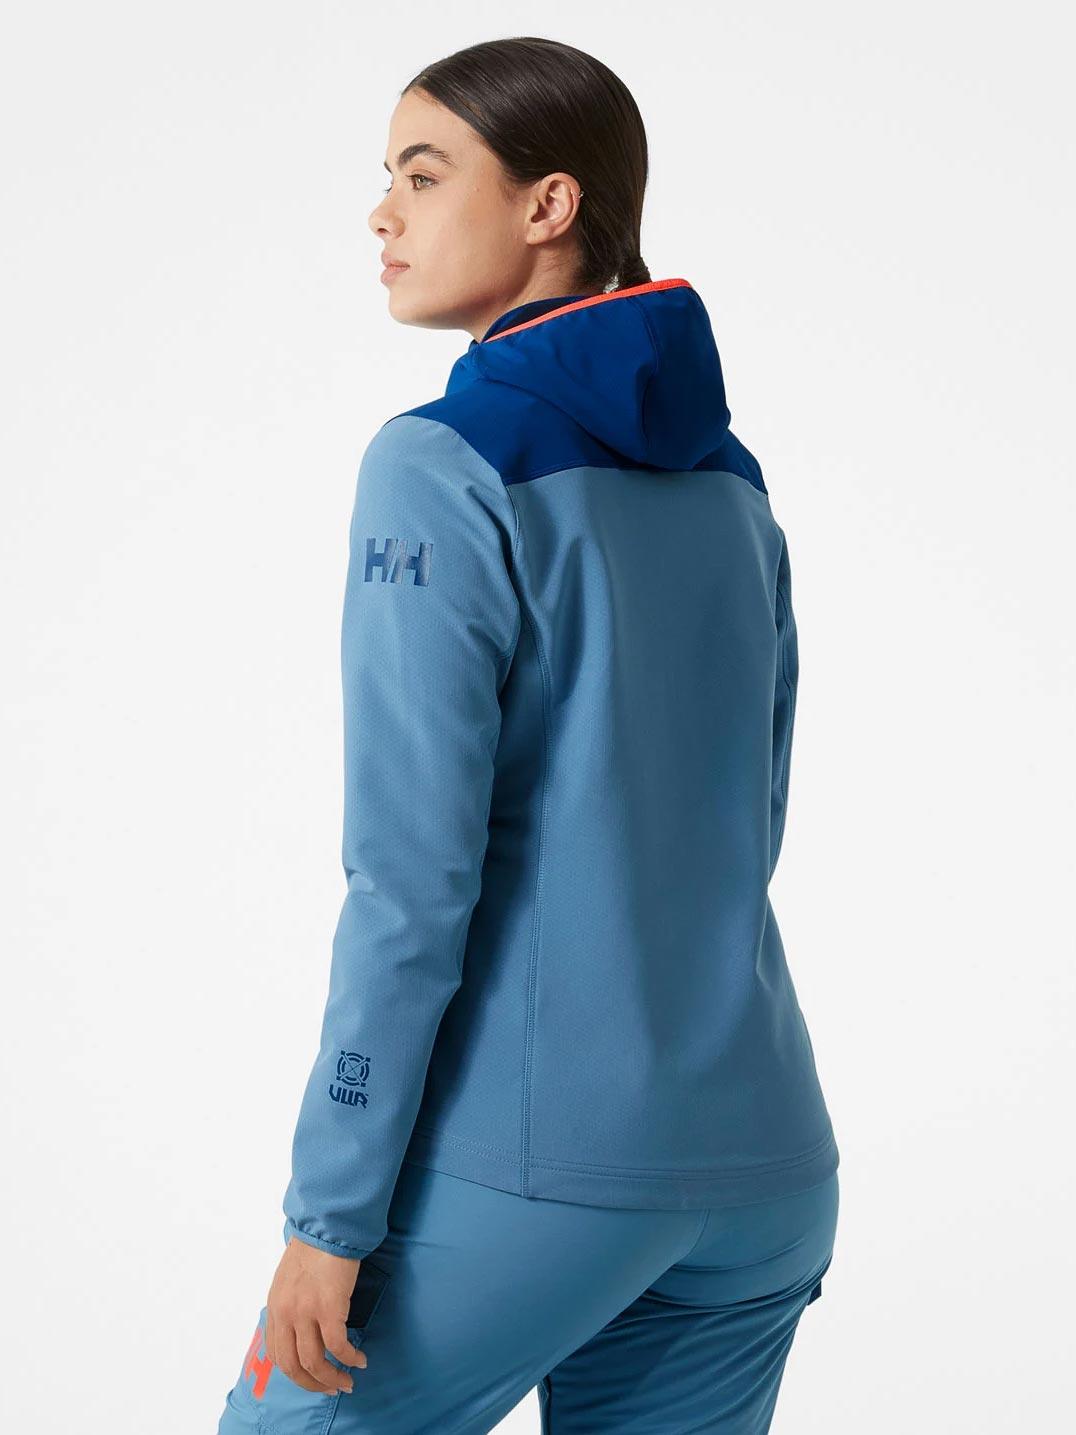 Selected image for HELLY HANSEN Ženska jakna W AURORA SHIELD FLEECE Jacket plava